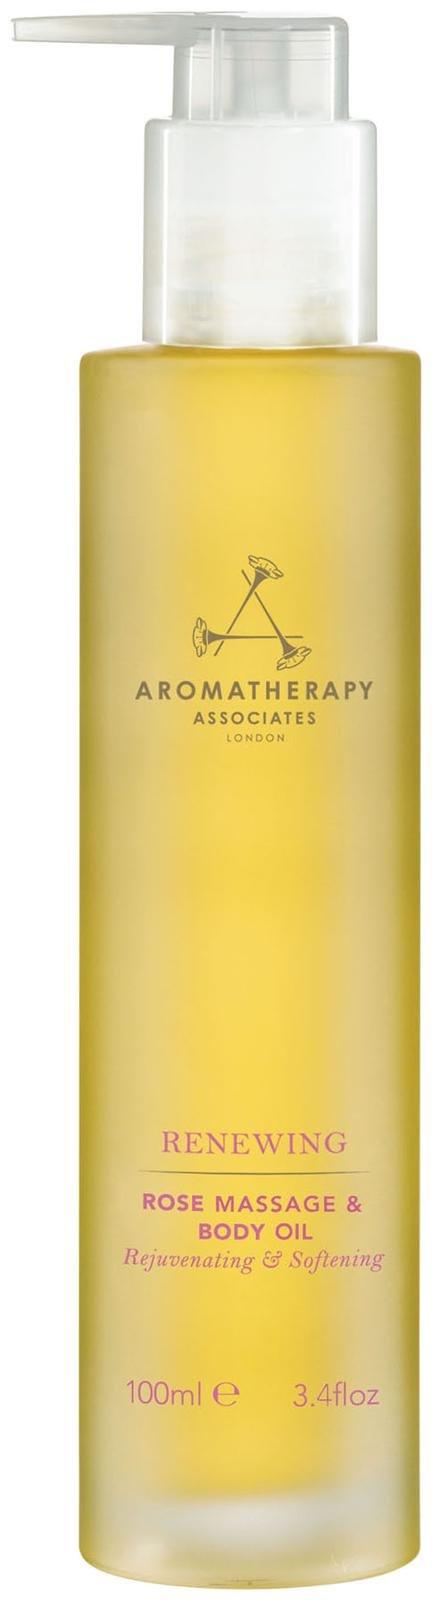 Aromatherapy Associates Renew Rose Massage & Body Oil